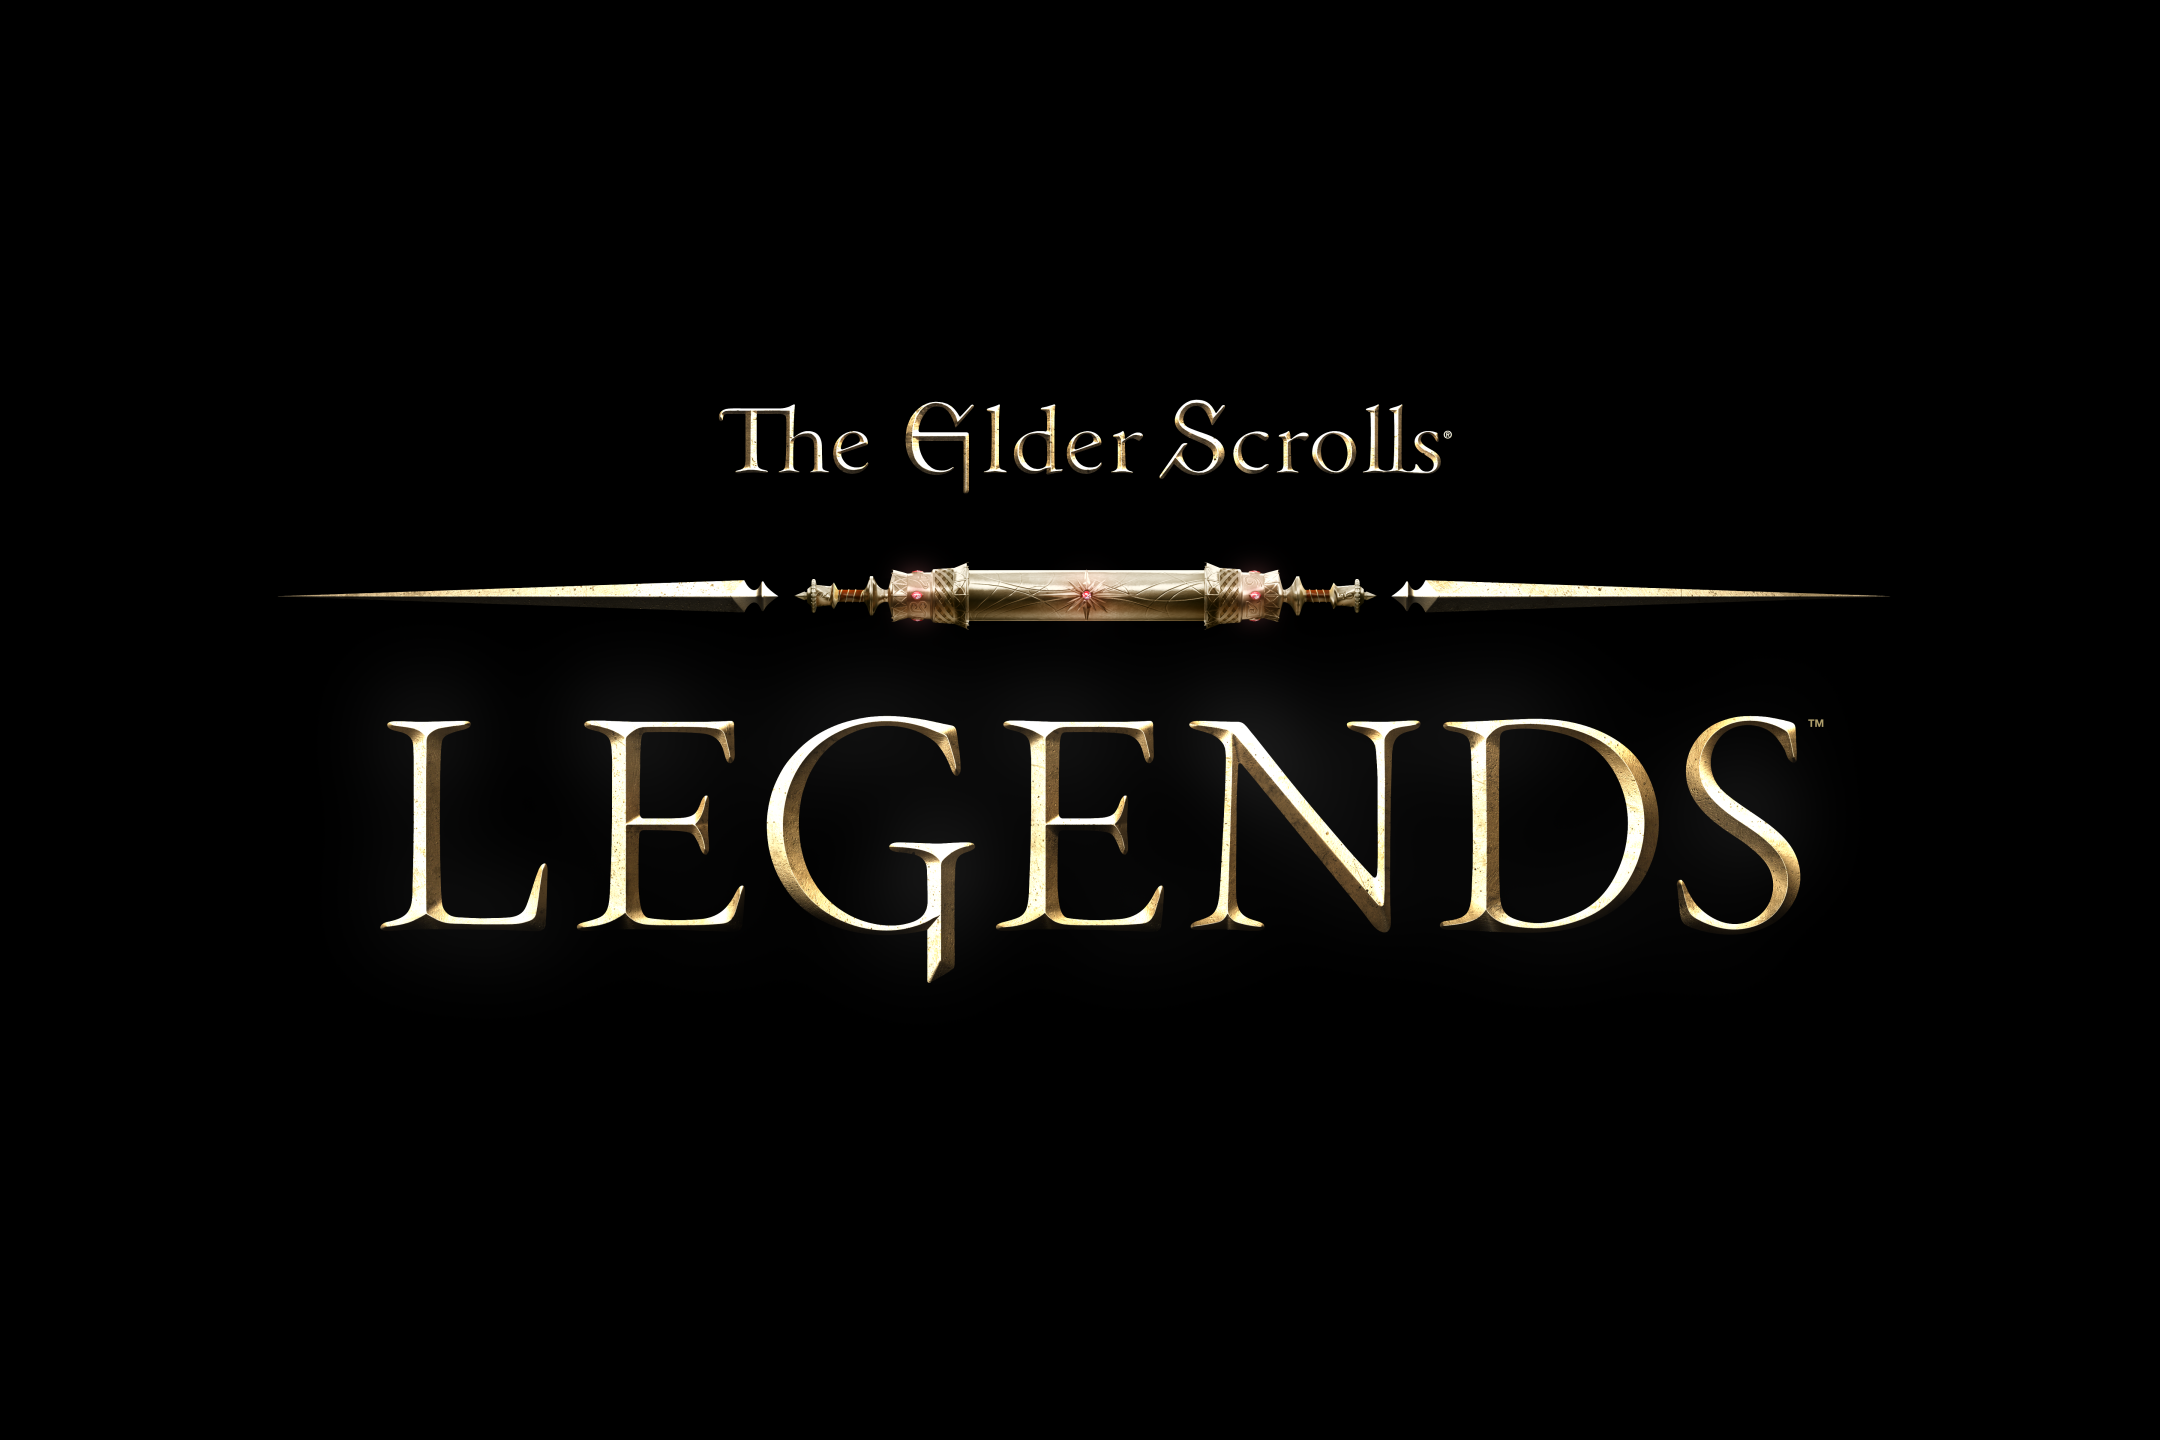 batch_The_Elder_Scrolls_Legends_LOGO_1434321049